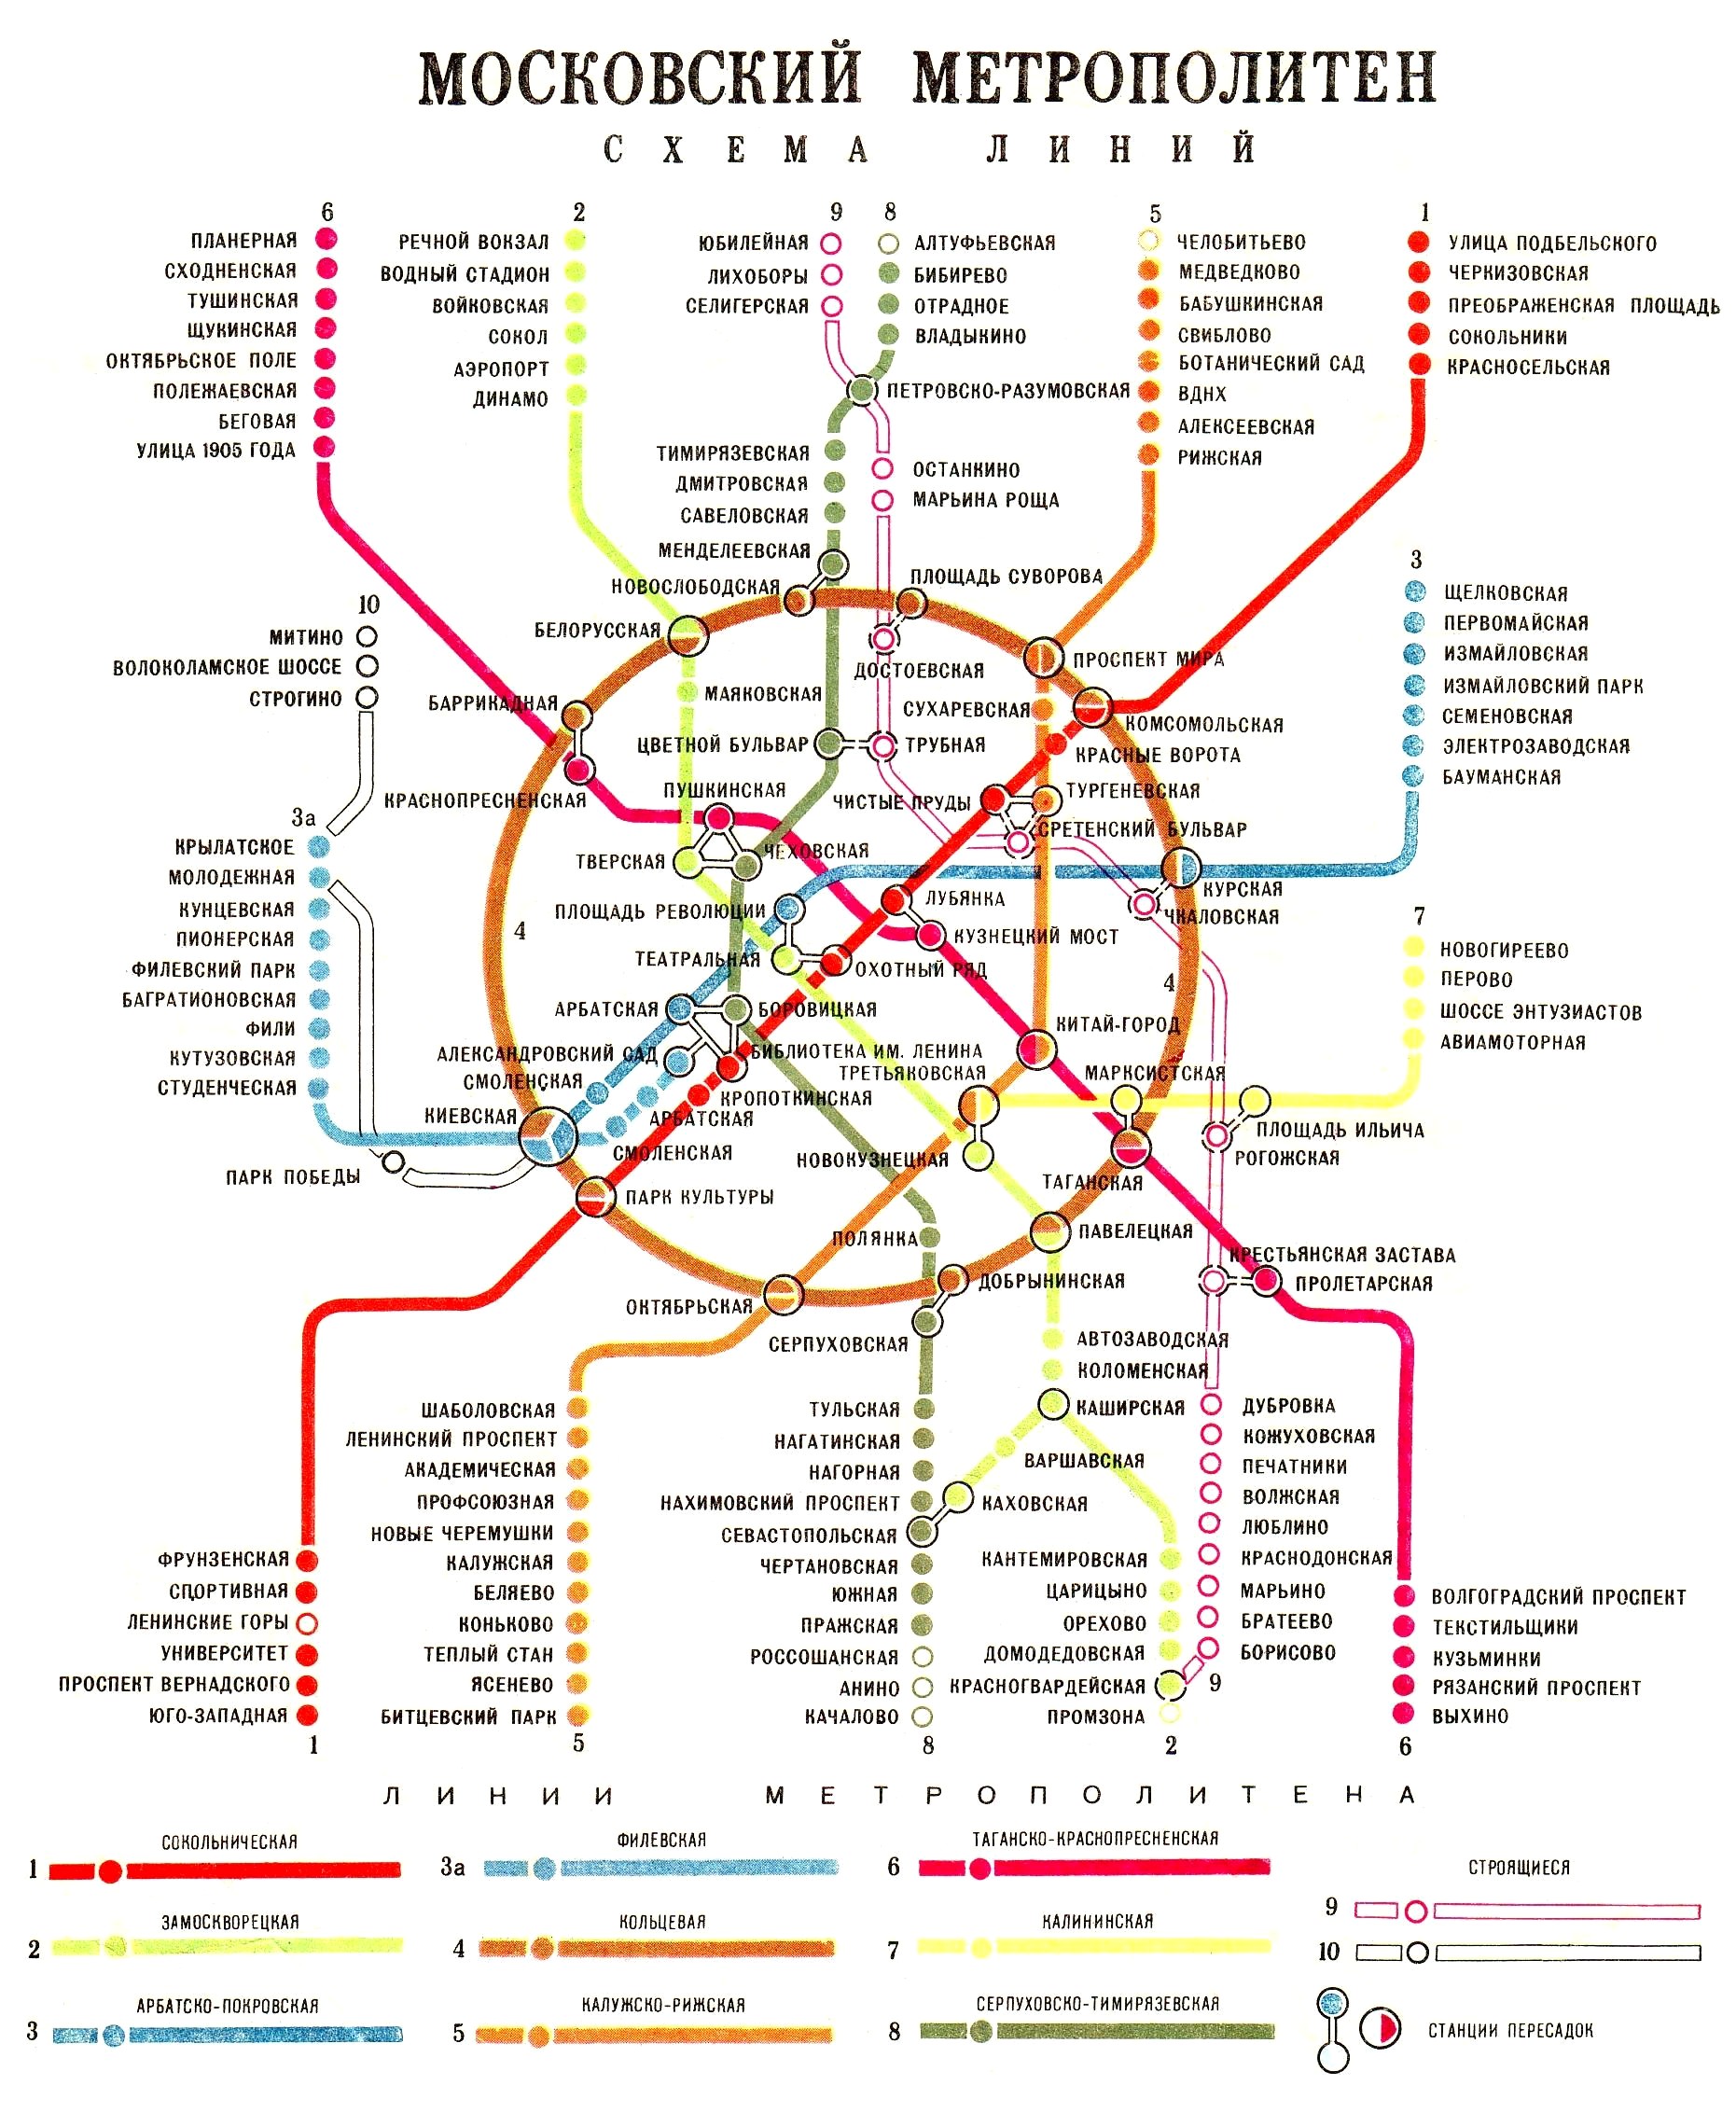 Московский метрополитен — схема линий (1994 год)